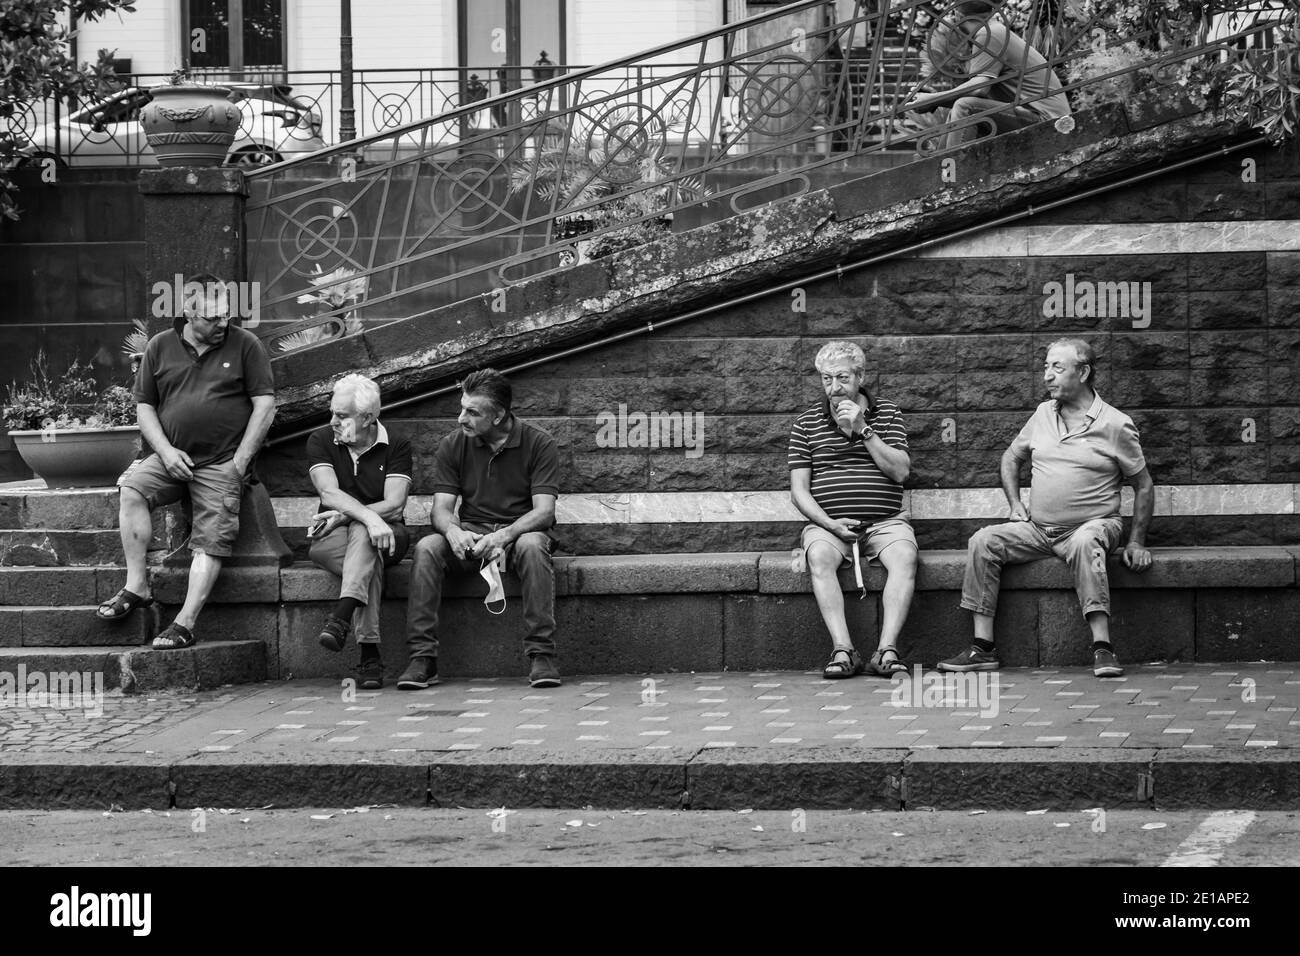 Zafferana etnea, Italy - 07 2020: Men chatting outdoor holding masks Stock Photo